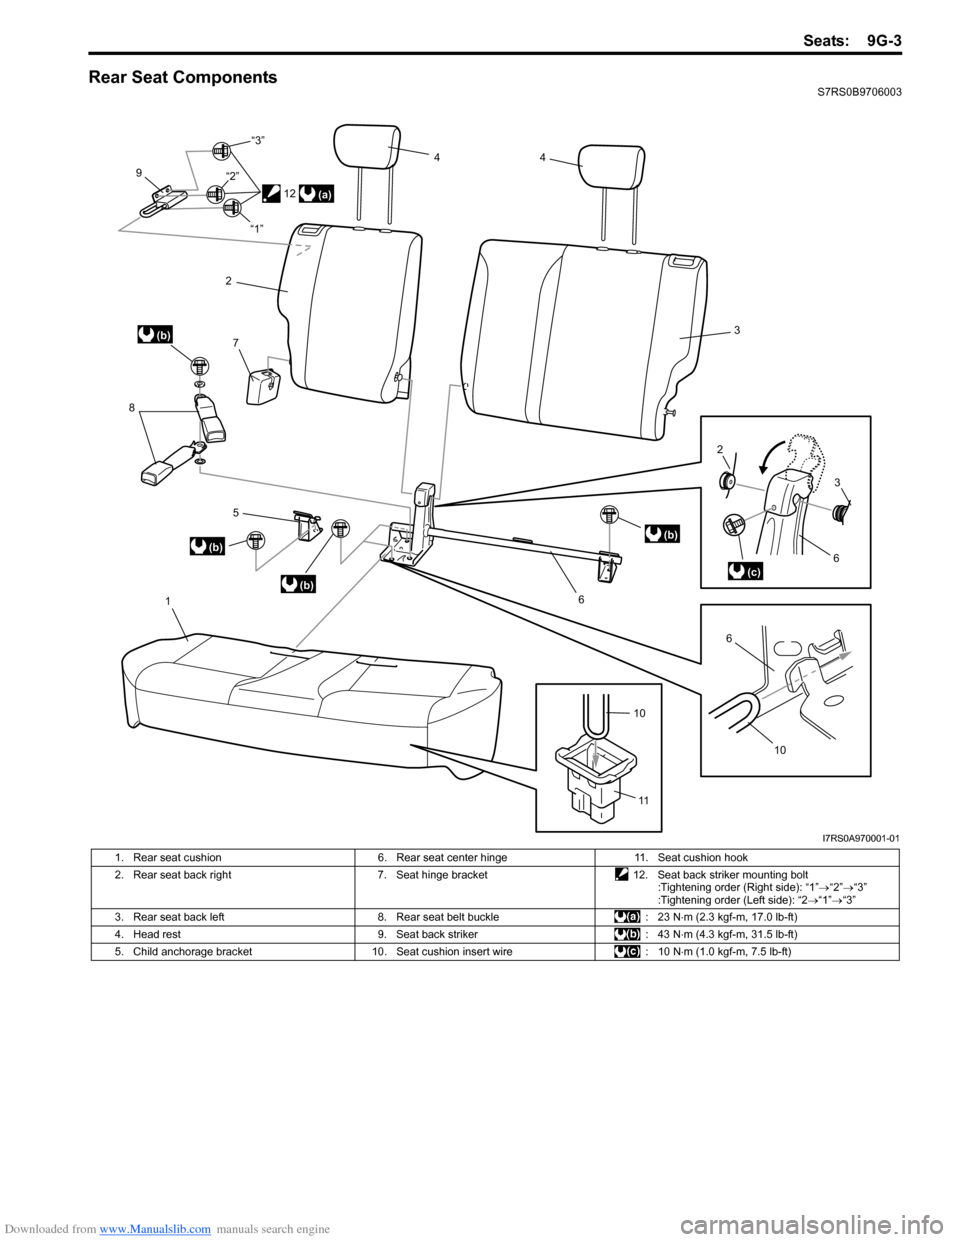 SUZUKI SWIFT 2006 2.G Service Workshop Manual Downloaded from www.Manualslib.com manuals search engine Seats: 9G-3
Rear Seat ComponentsS7RS0B9706003
1
5
(b)
(b)
(b)
8
7
9
2
4
4
3
(b)
6
6(c)
2
3
10
6
(a)
10
11
12
“1”
“2”
“3”
I7RS0A9700